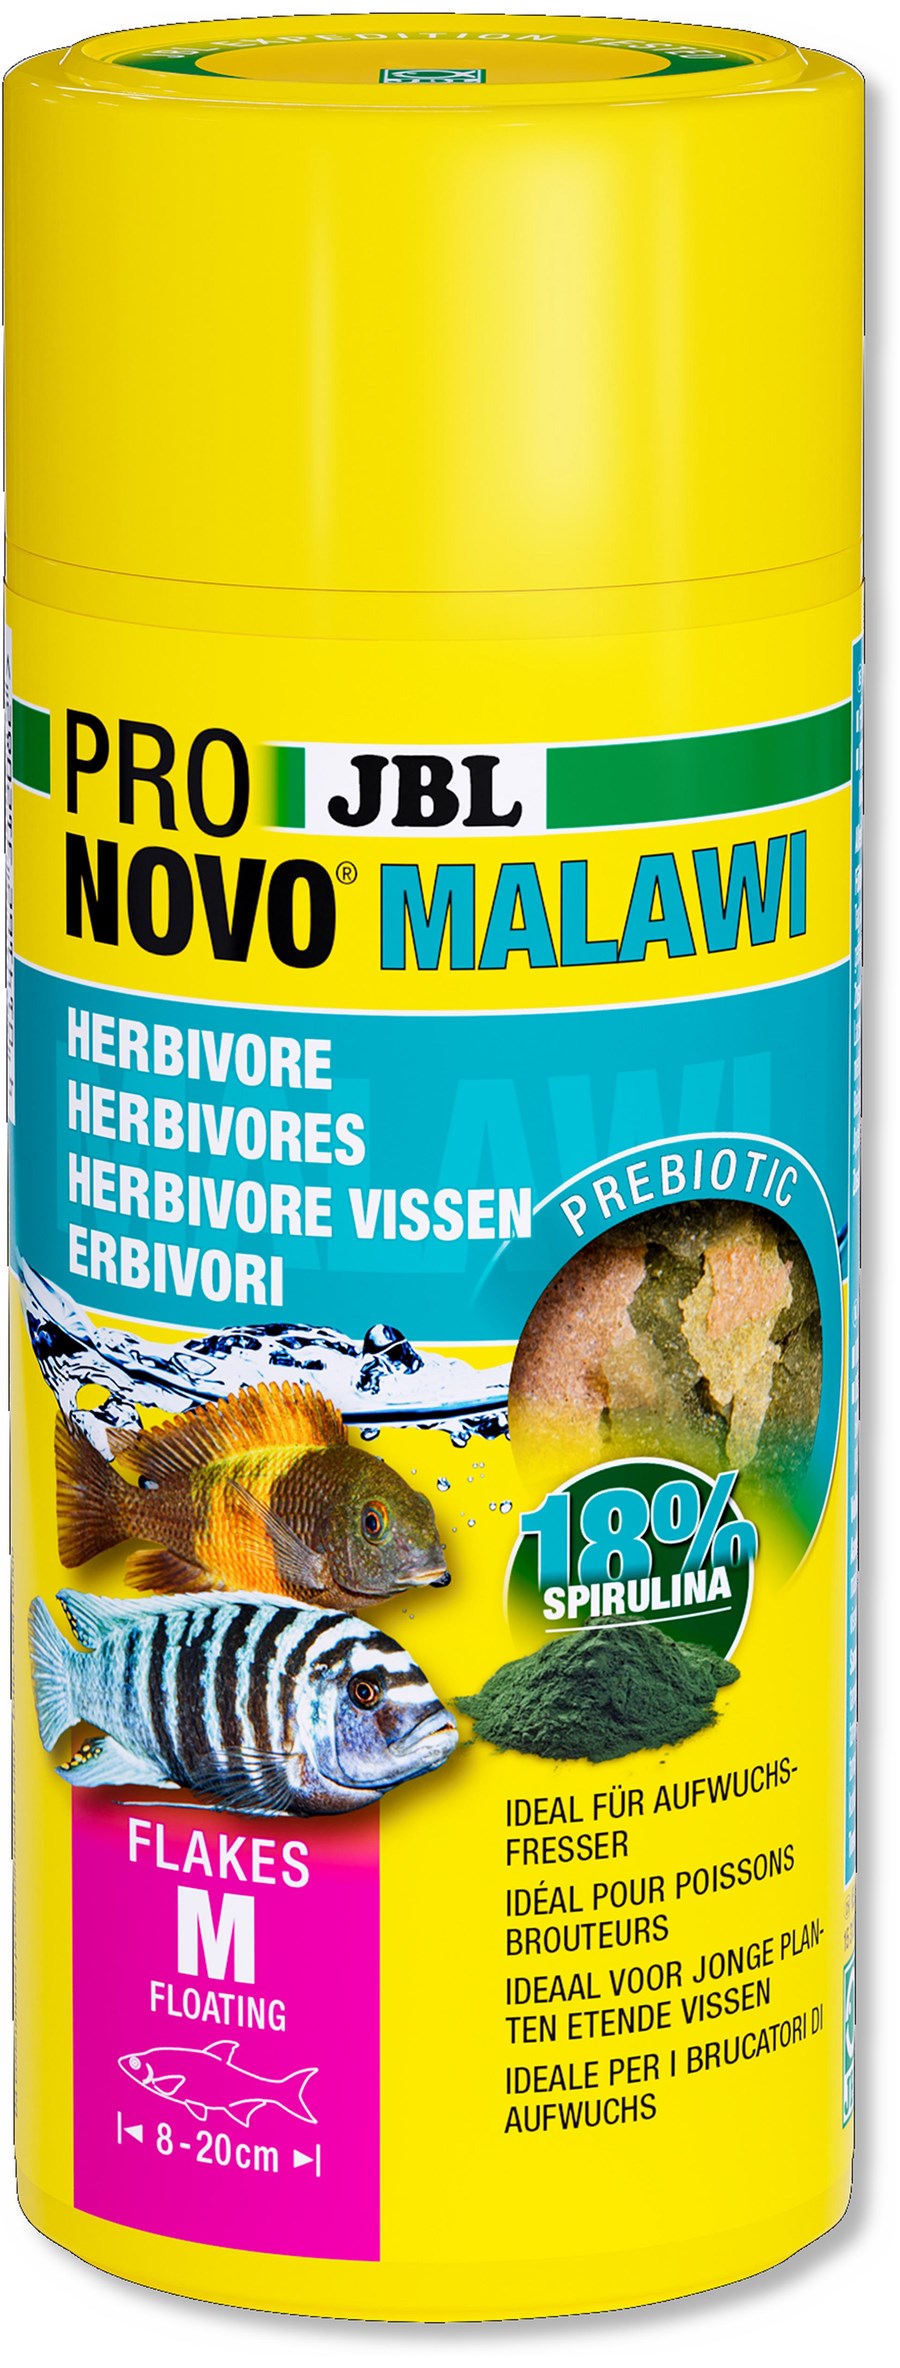 JBL PRONOVO MALAWI FLAKES M 250ml